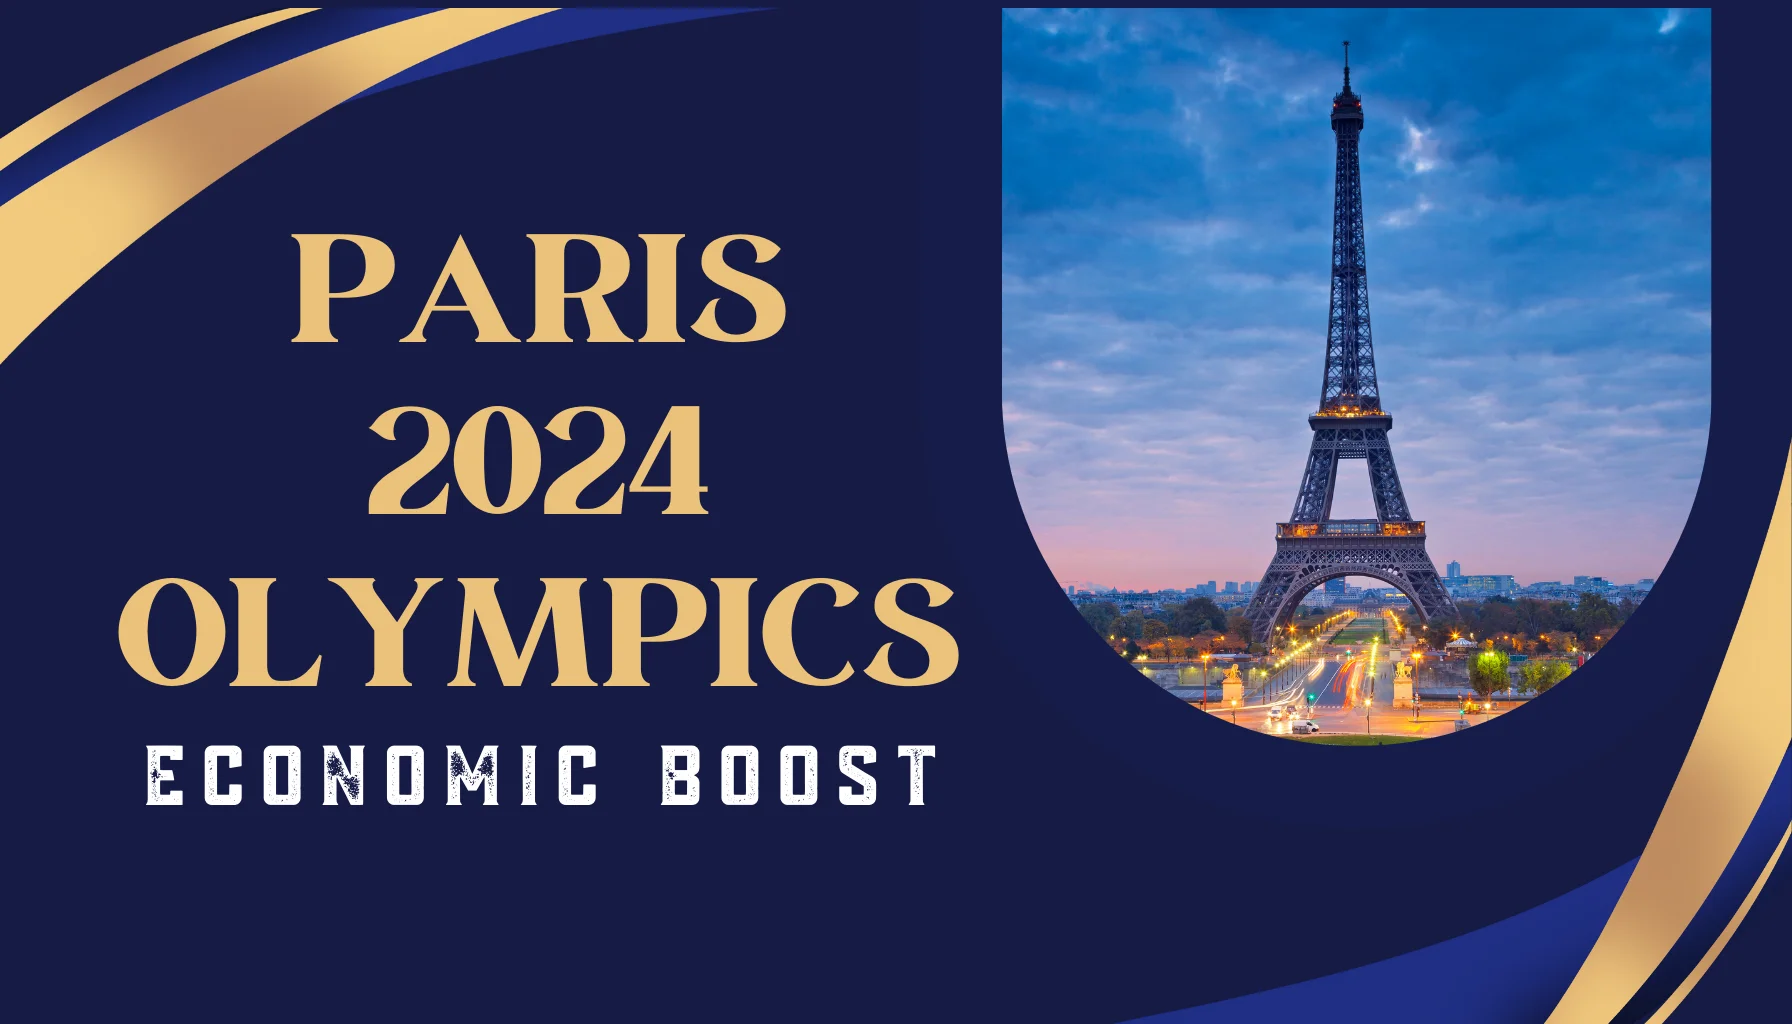 Paris 2024 Olympics Could Generate €11.1 Billion Economic Boost, Study Finds